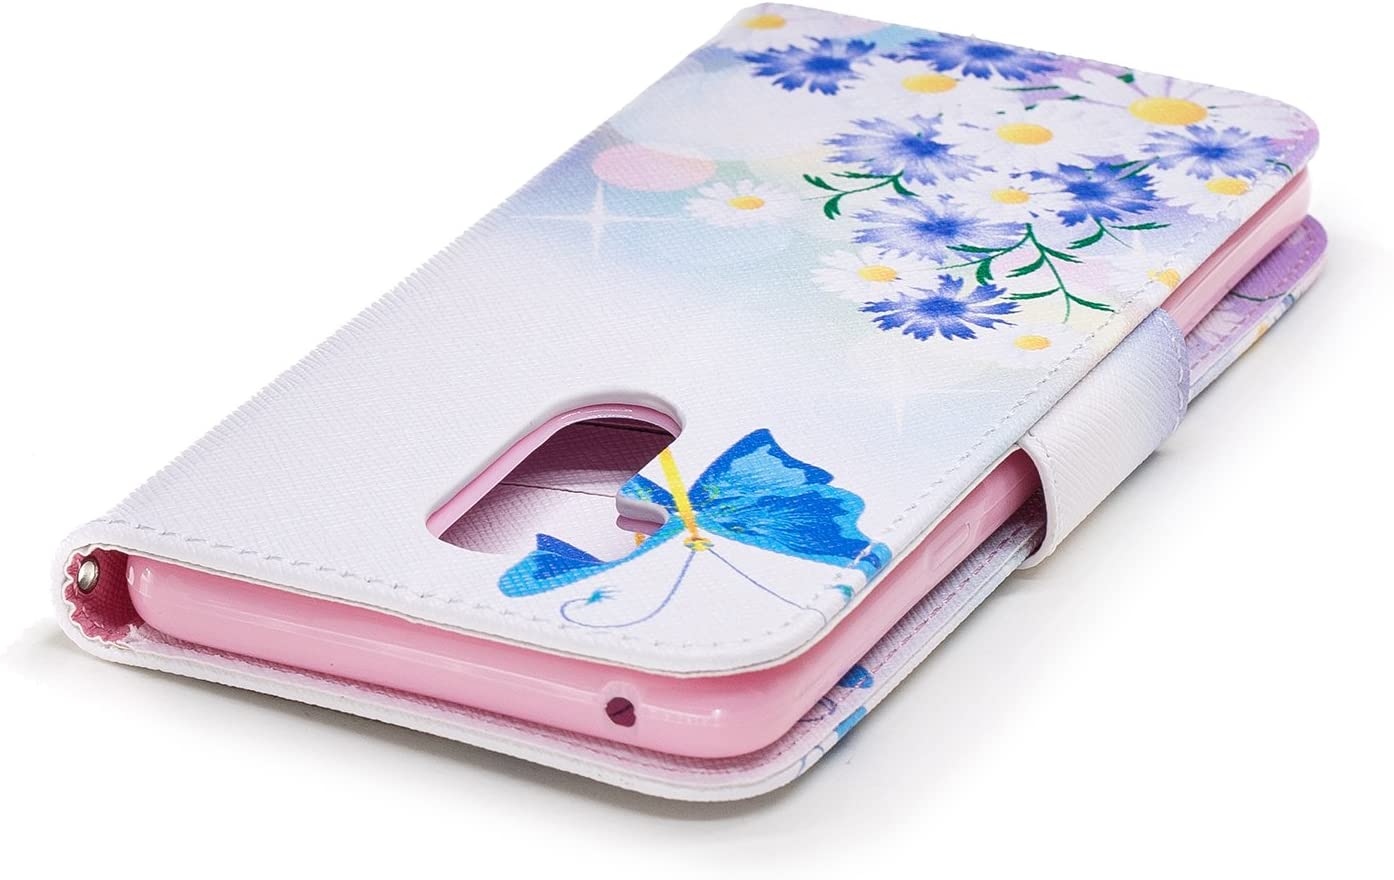 HMTECHUS LG G7 Case Luxury Blue Daisy Butterfly Elegant PU Leather Flip Folio Card Slot Wallet - e4cents